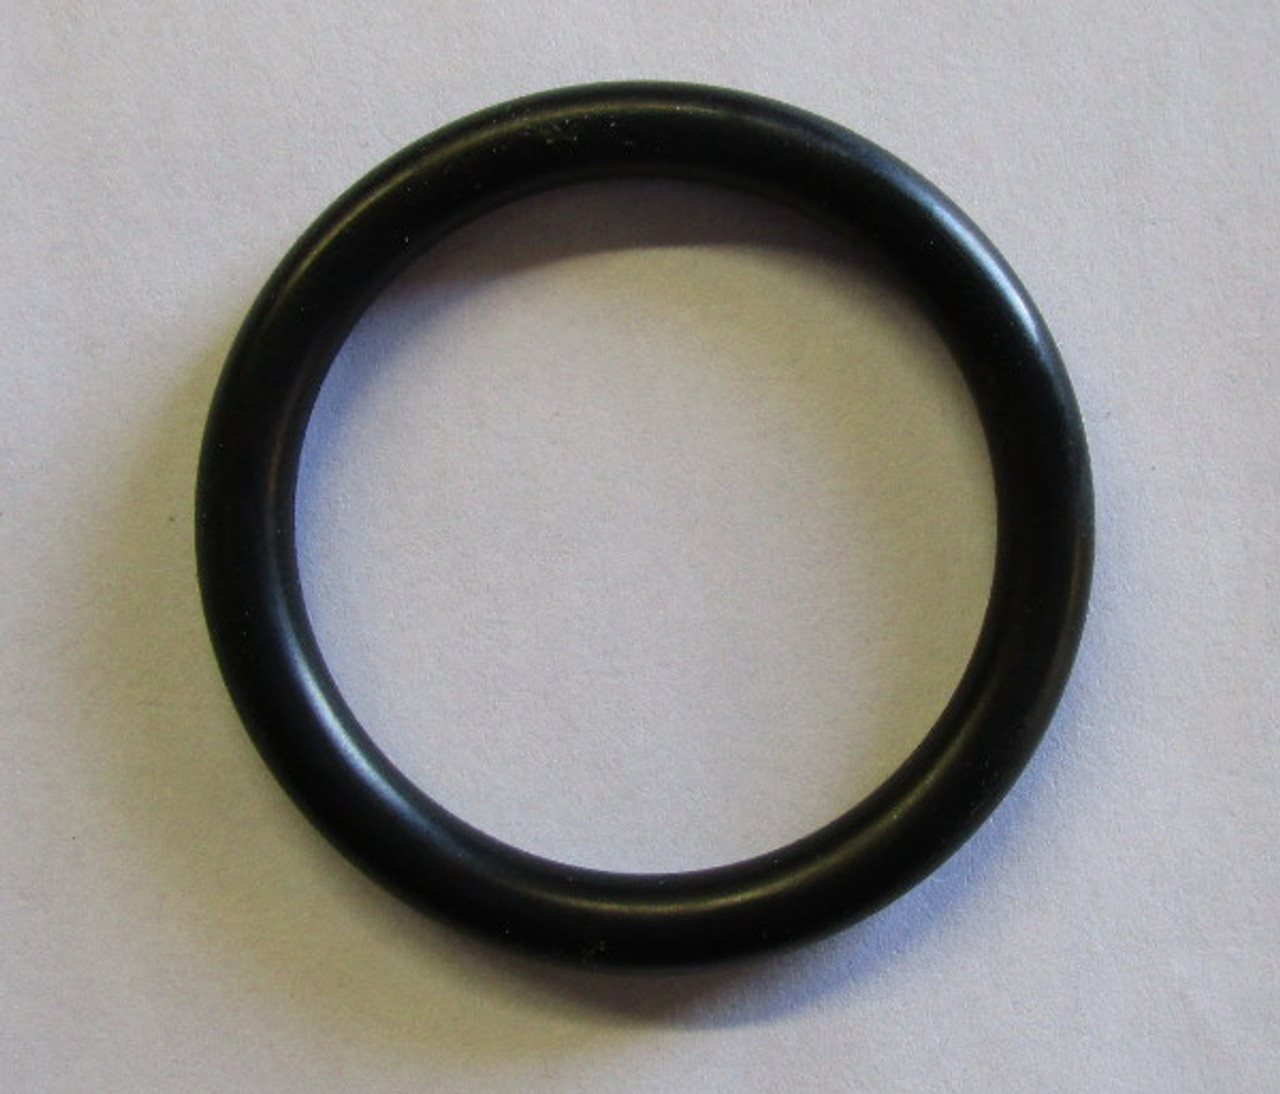 Black Colour O-ring - ID - 25.12mm x CS - 1.78mm - EPDM 70 FDA/USP | SBR  Life Sciences